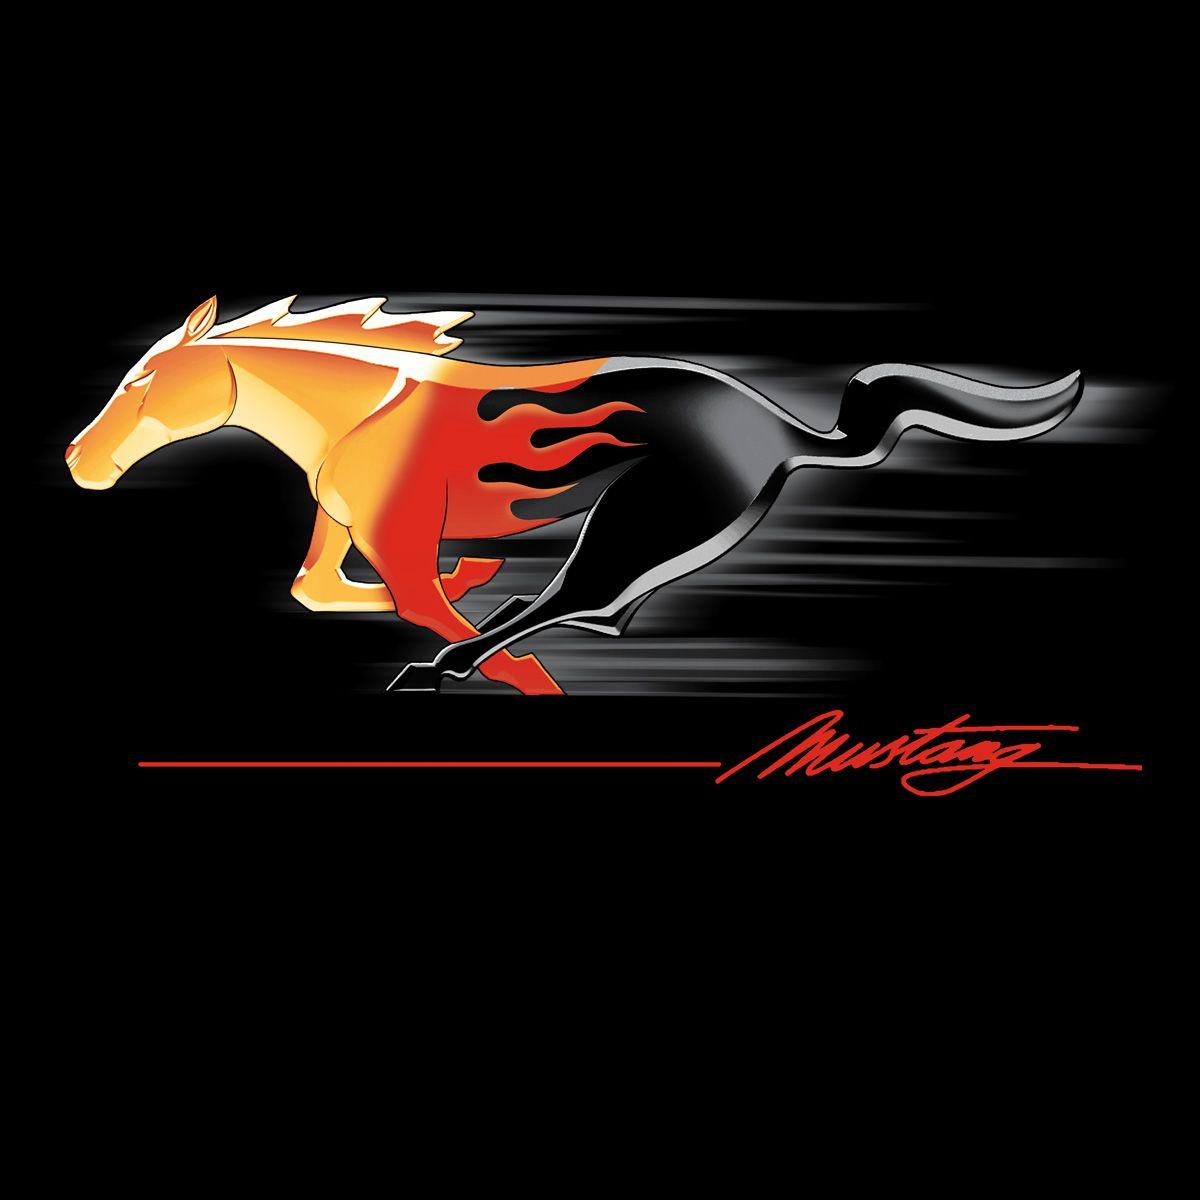 Ford Mustang Pony Logo Logodix